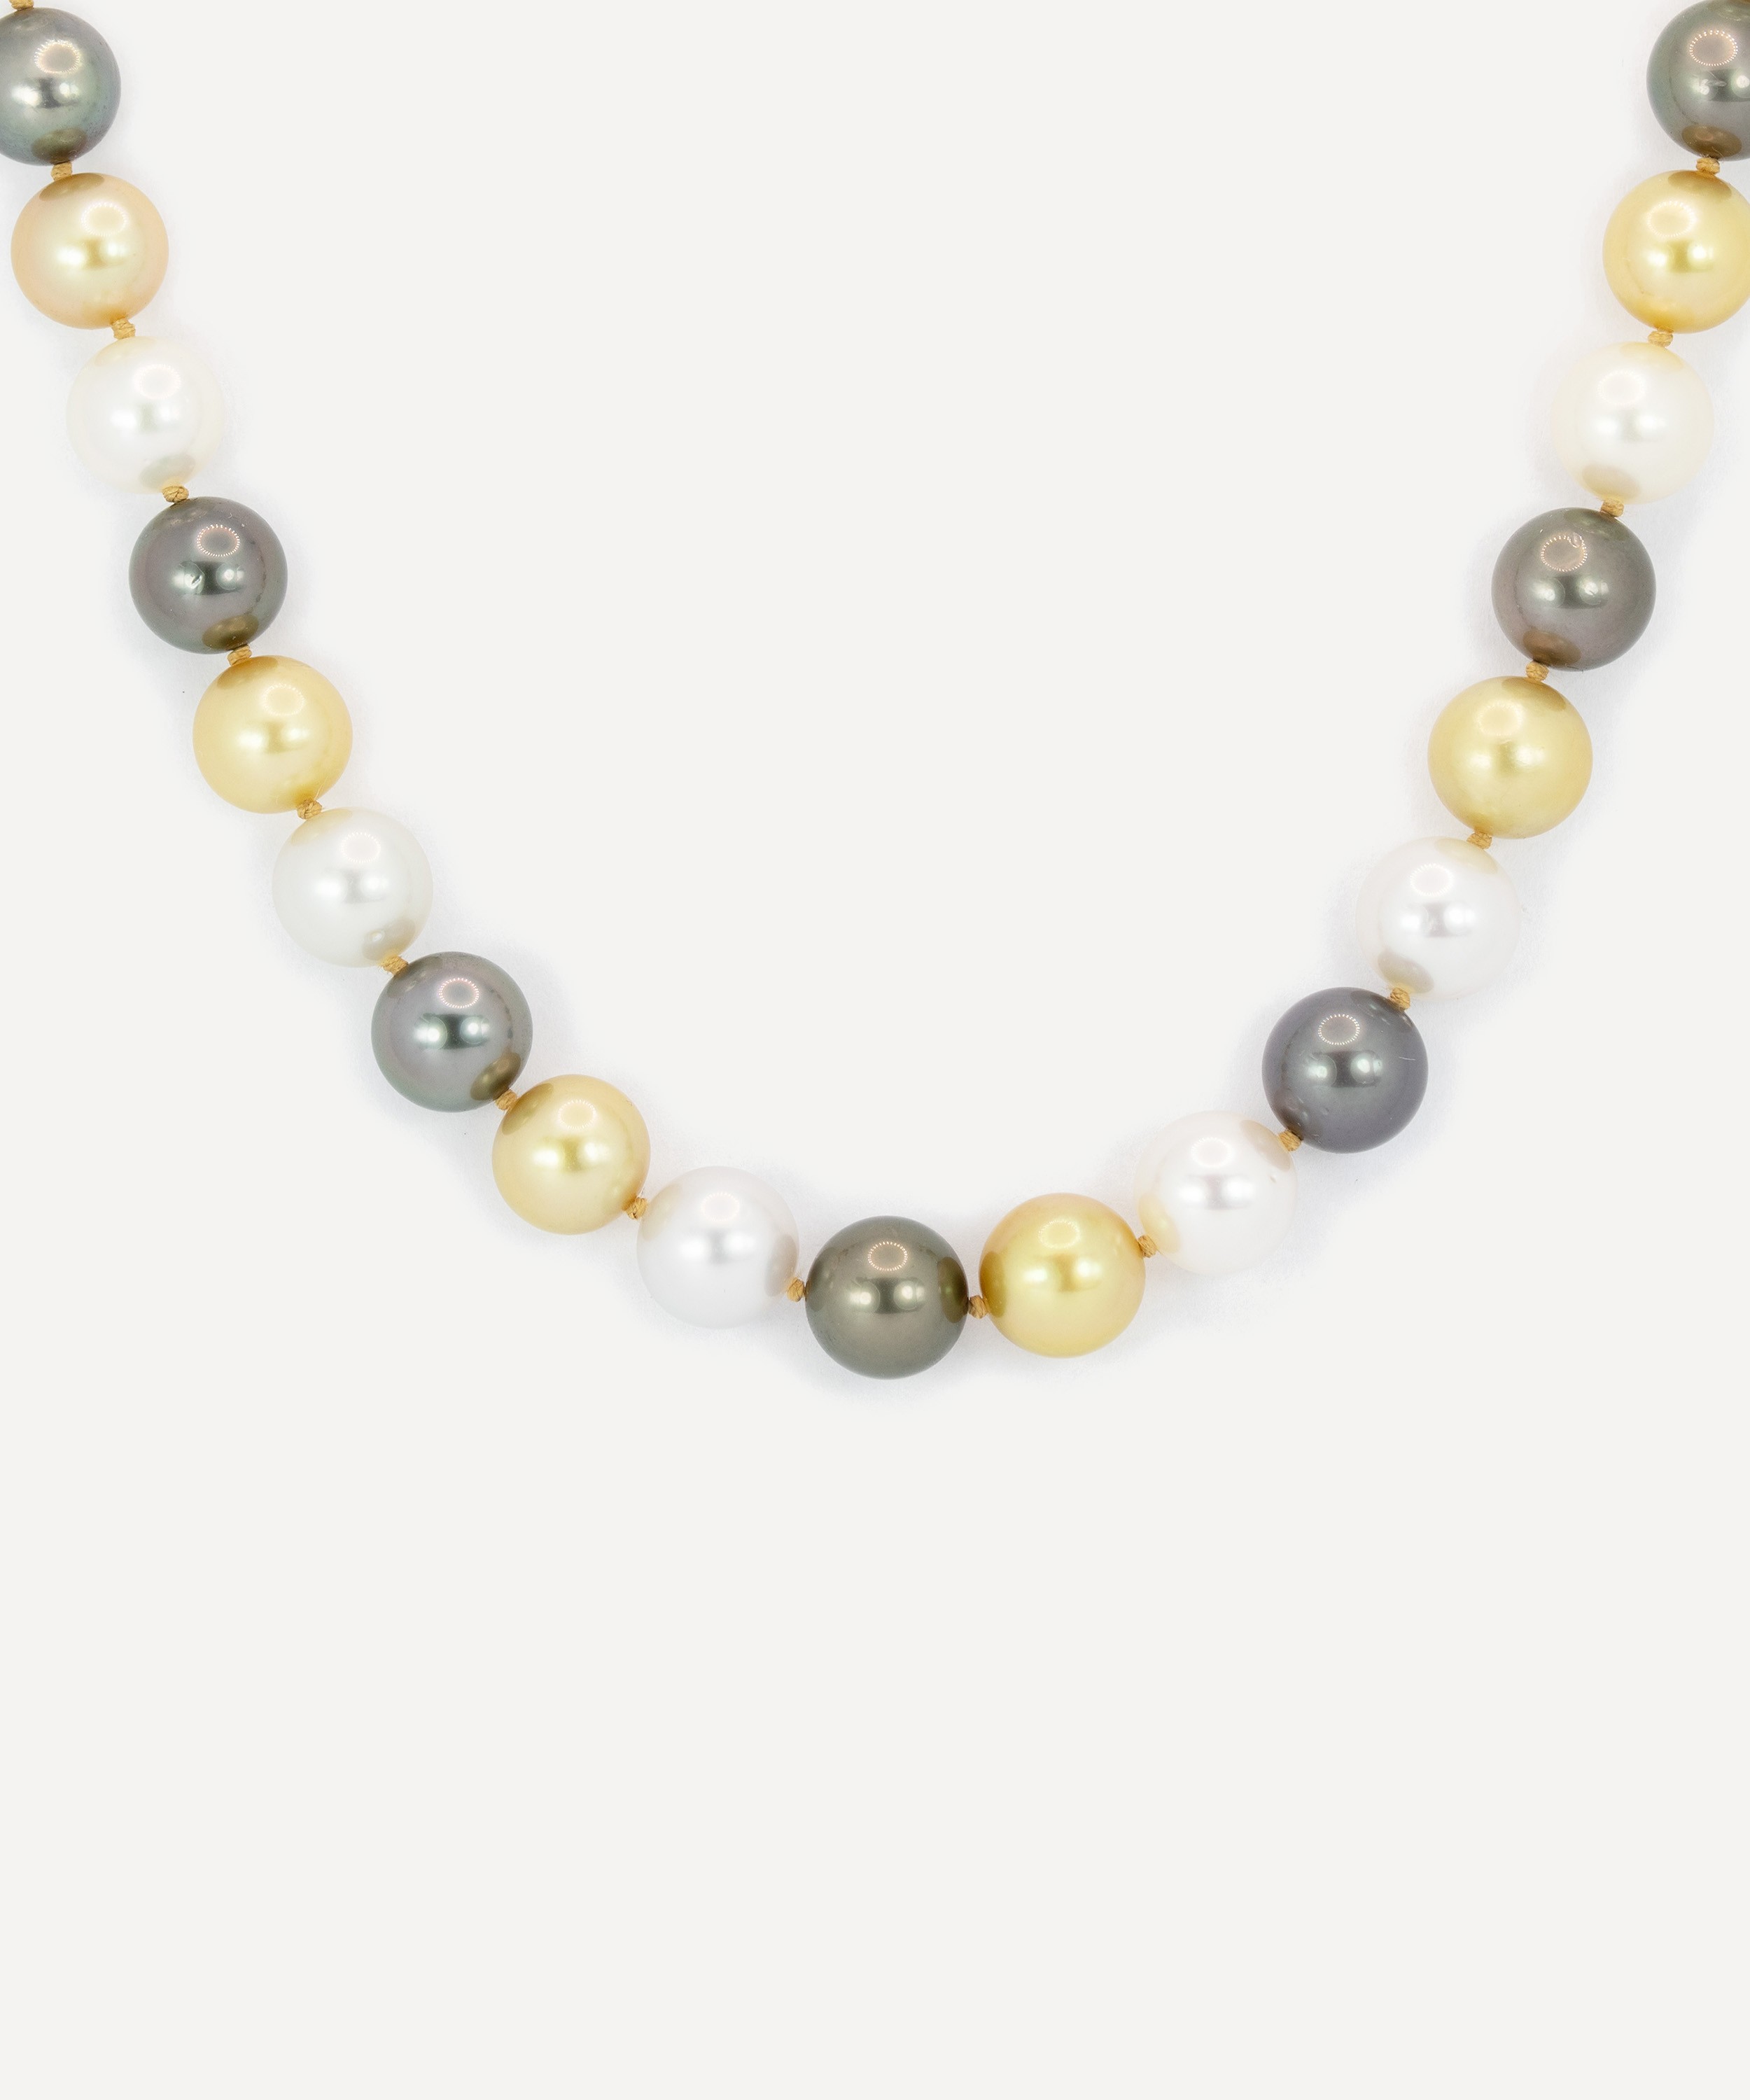 Kojis - 14ct Gold Tri-Colour South Sea Pearl Necklace